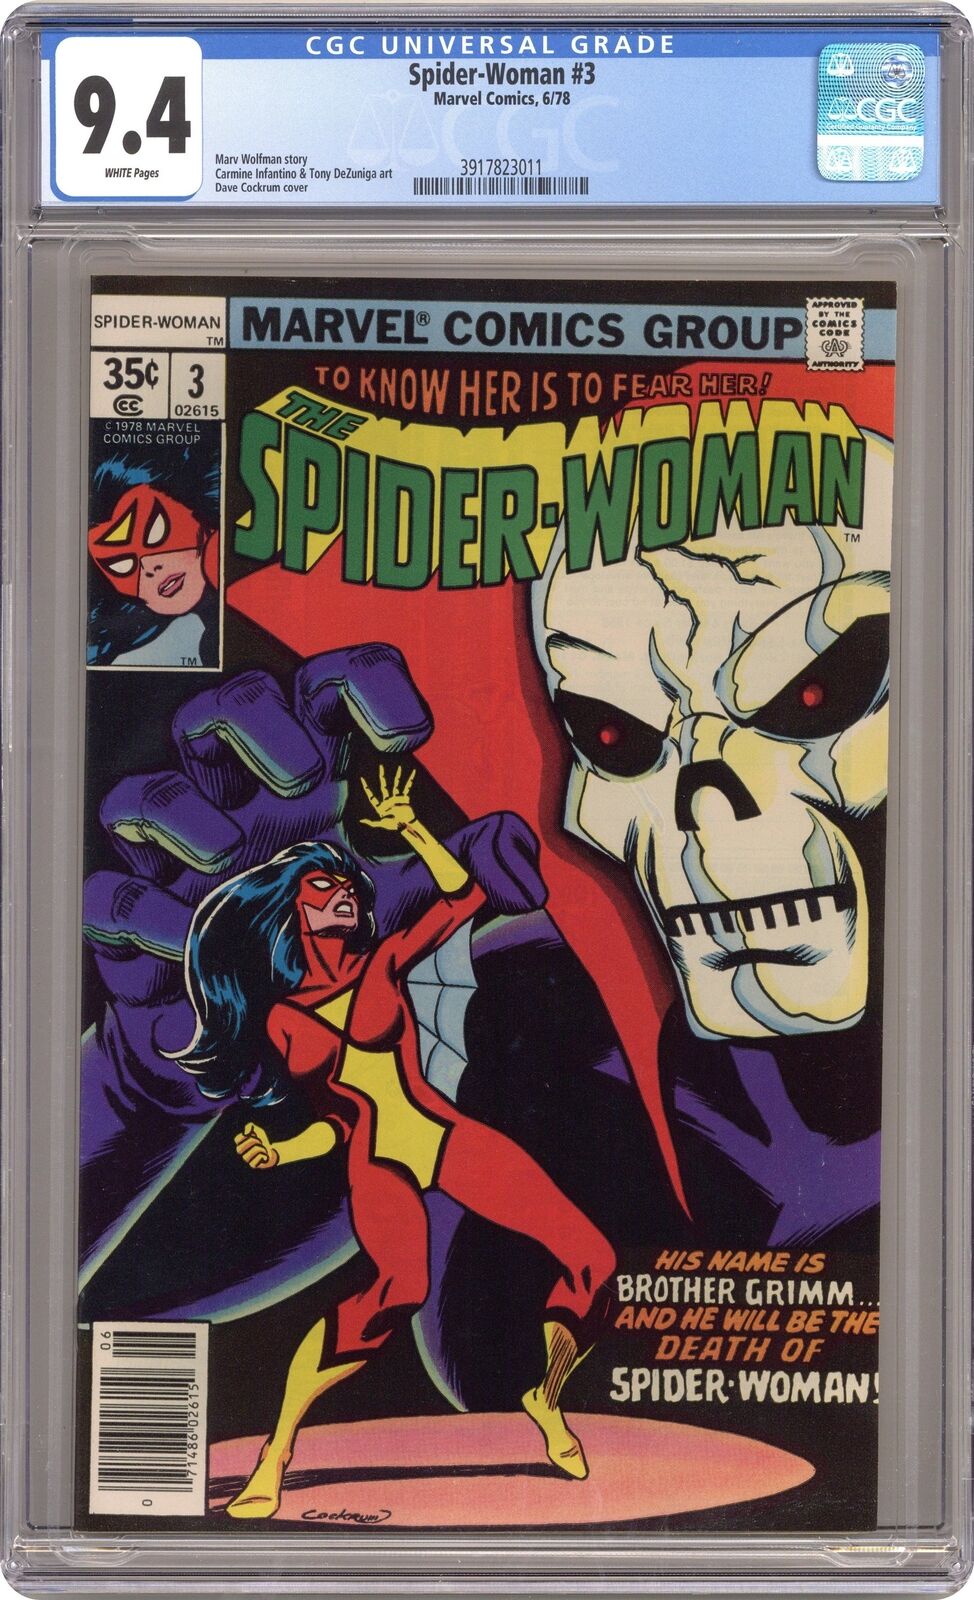 Spider-Woman #3 CGC 9.4 1978 3917823011